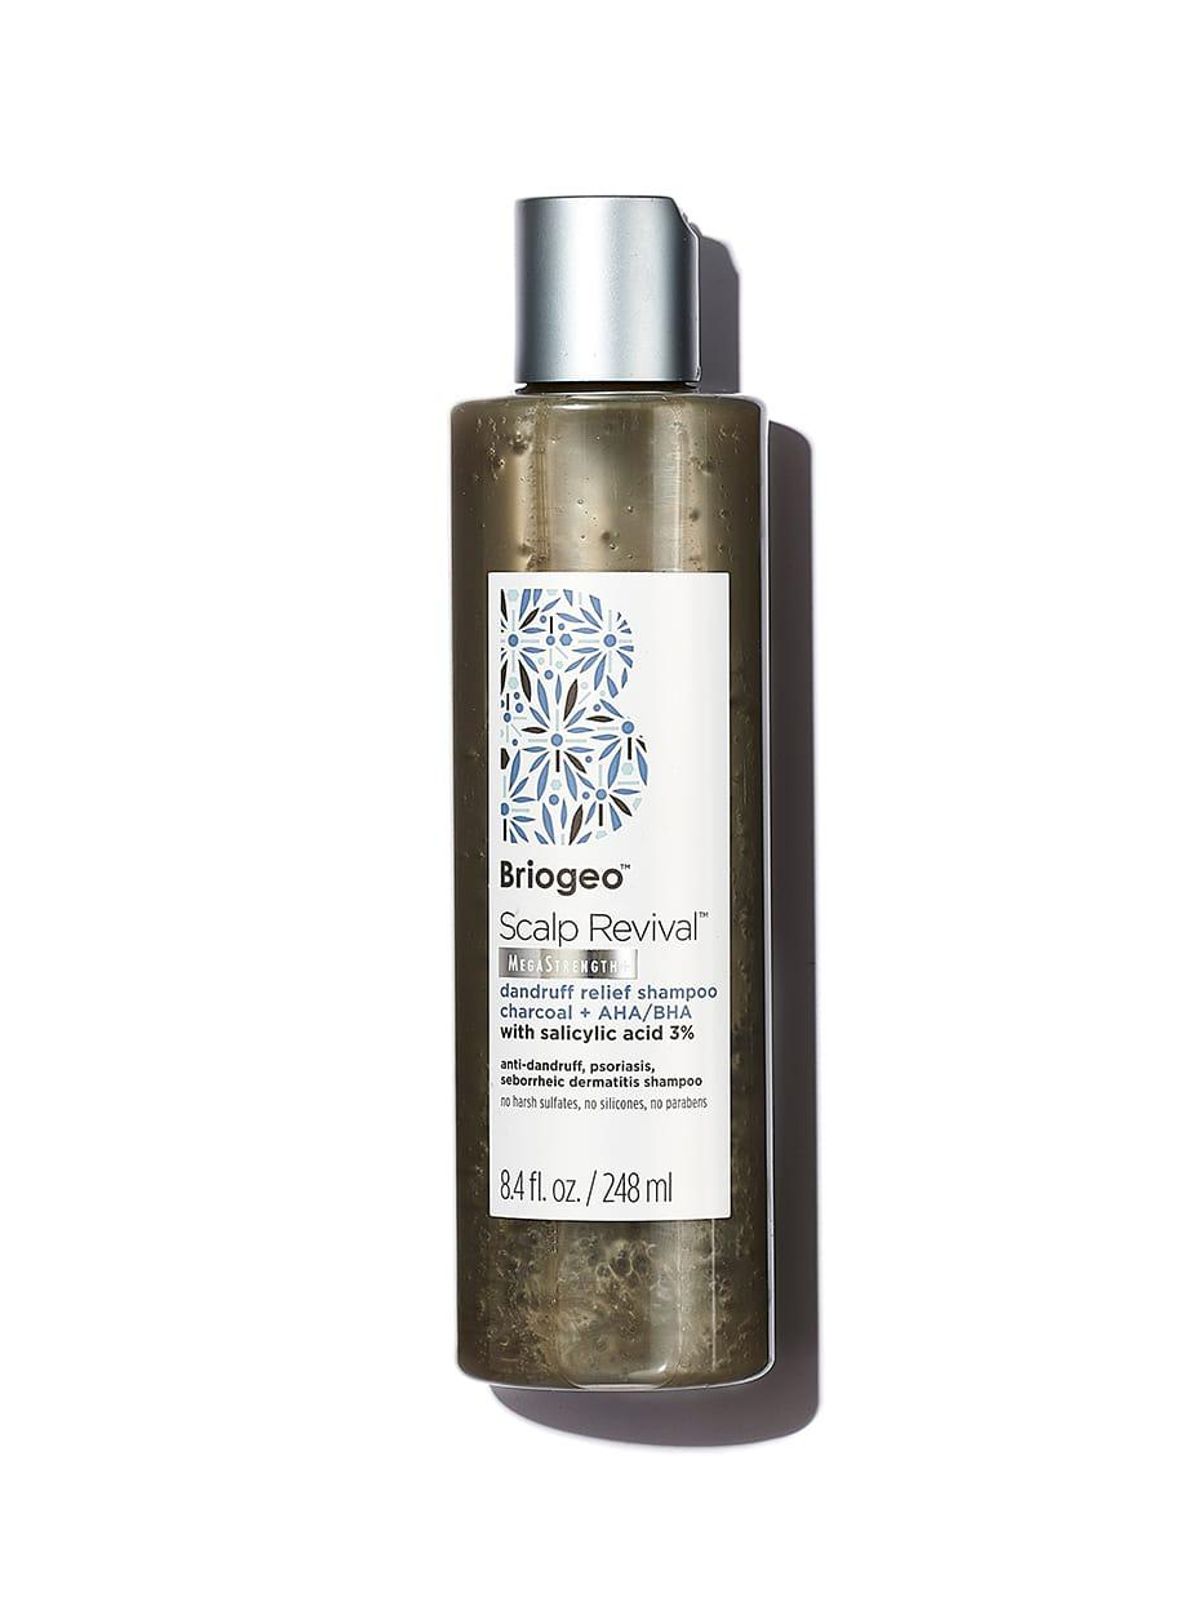 Scalp Revival Dandruff Relief Charcoal Shampoo